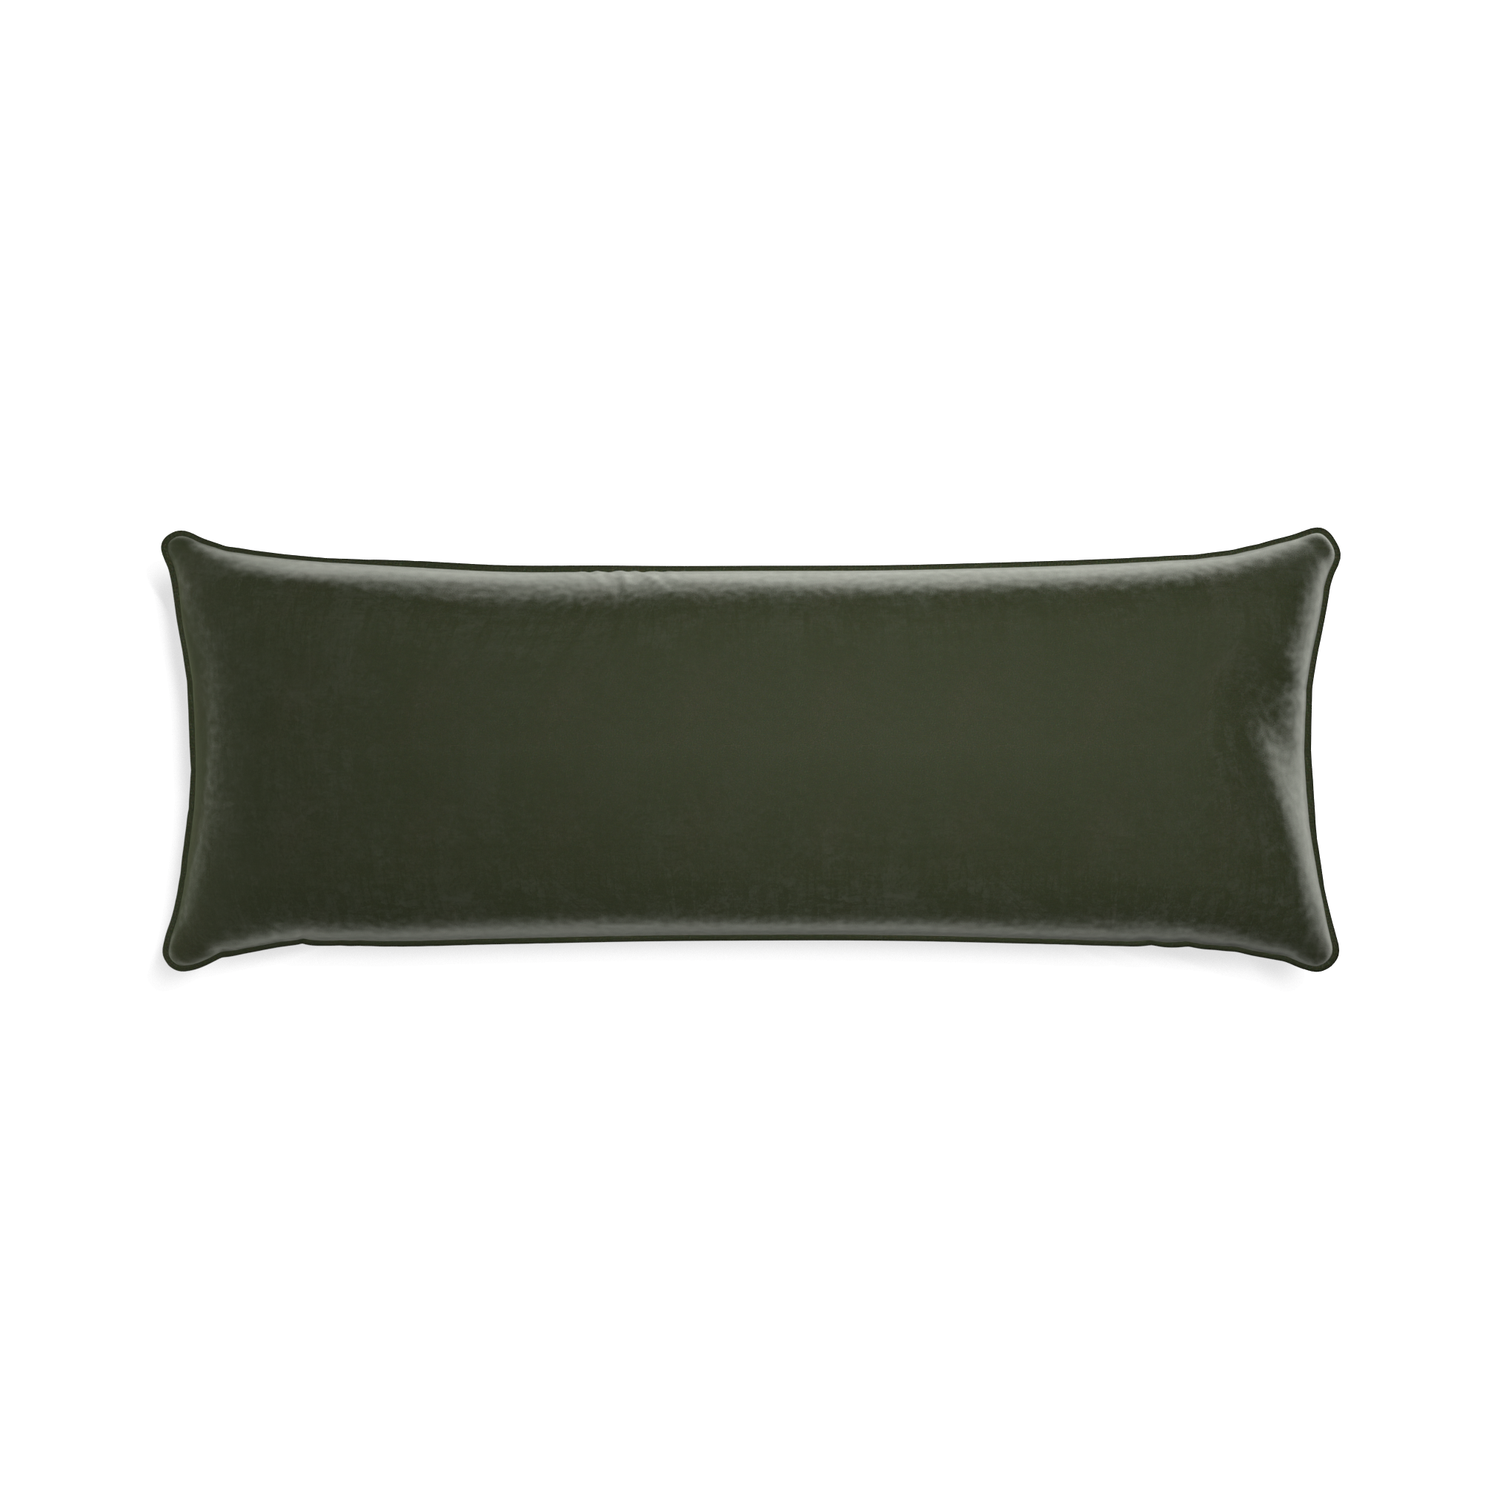 rectangle fern green velvet pillow with fern green piping